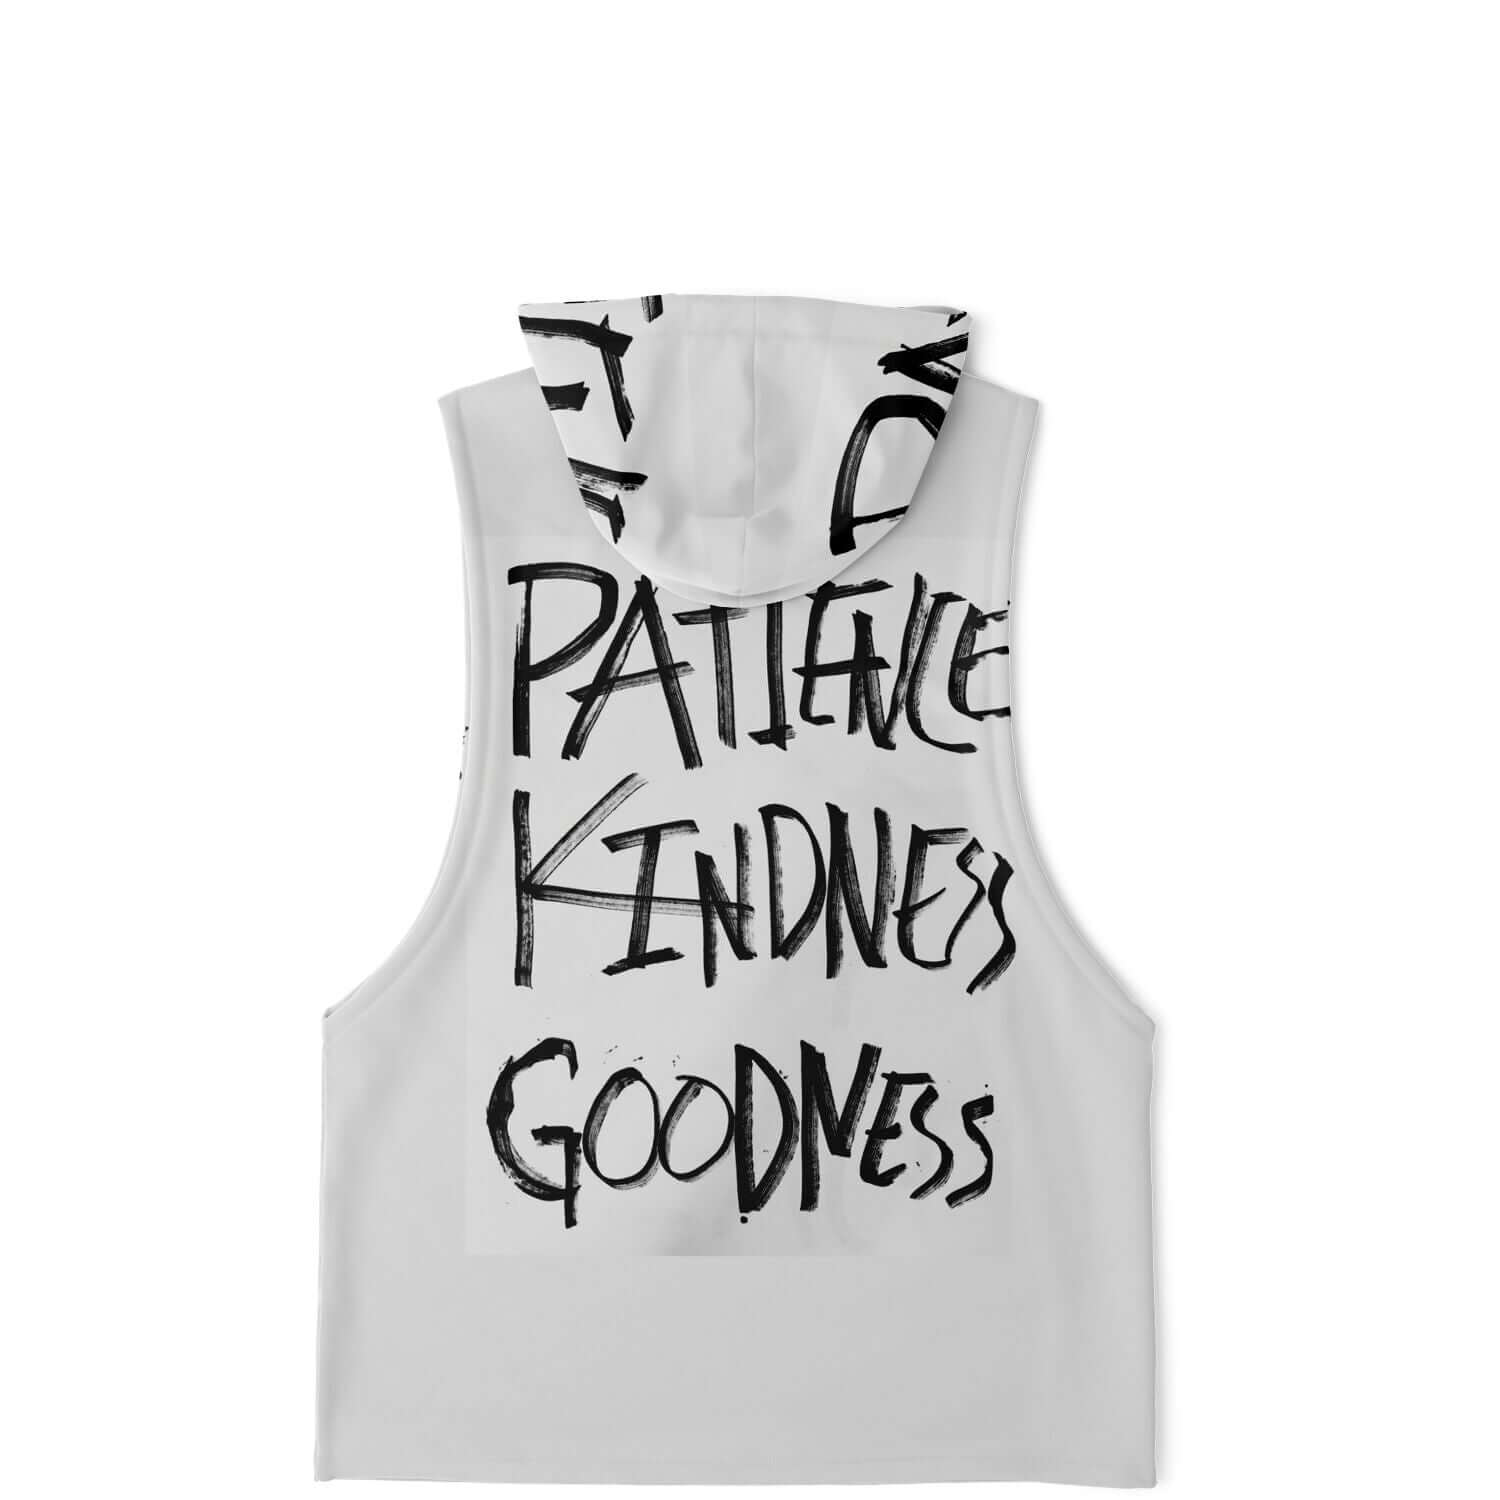 Patience Kindness Goodness